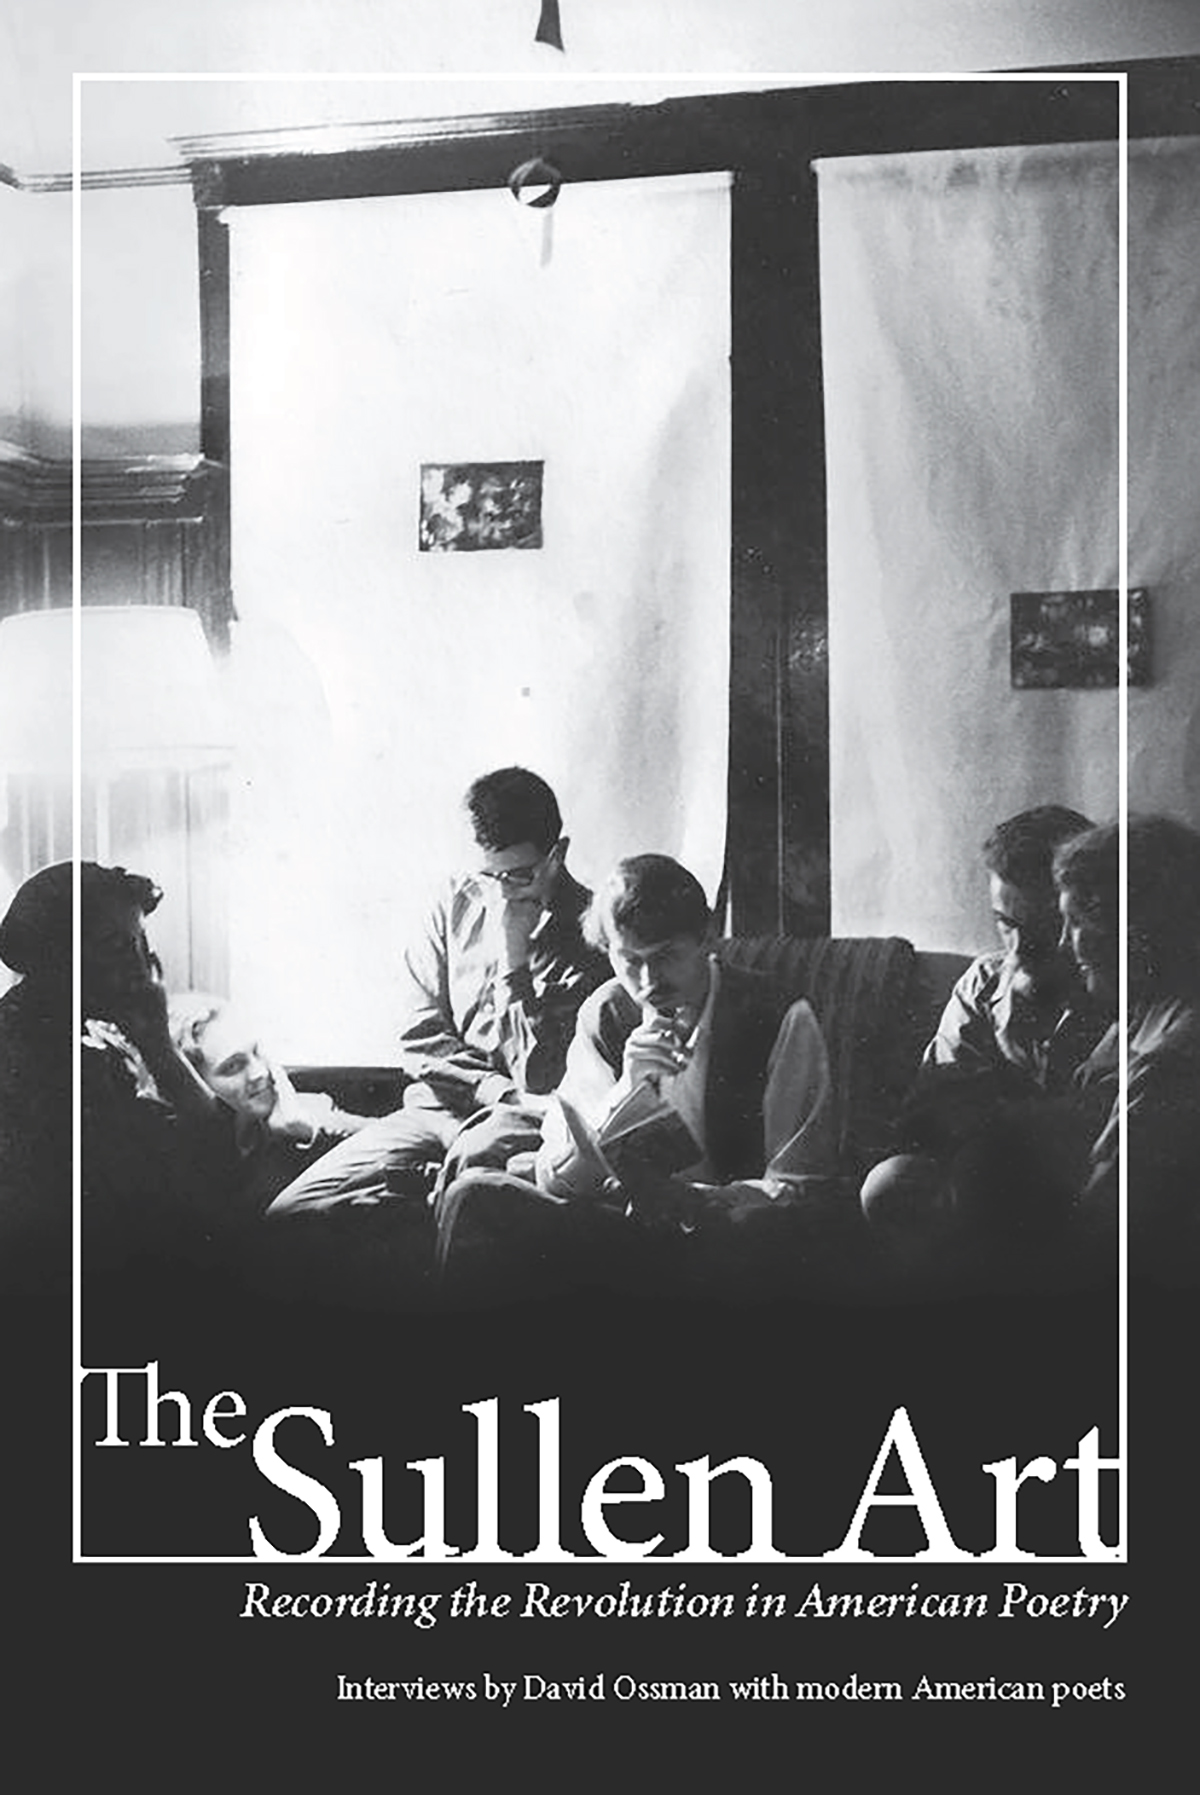 The Sullen Art